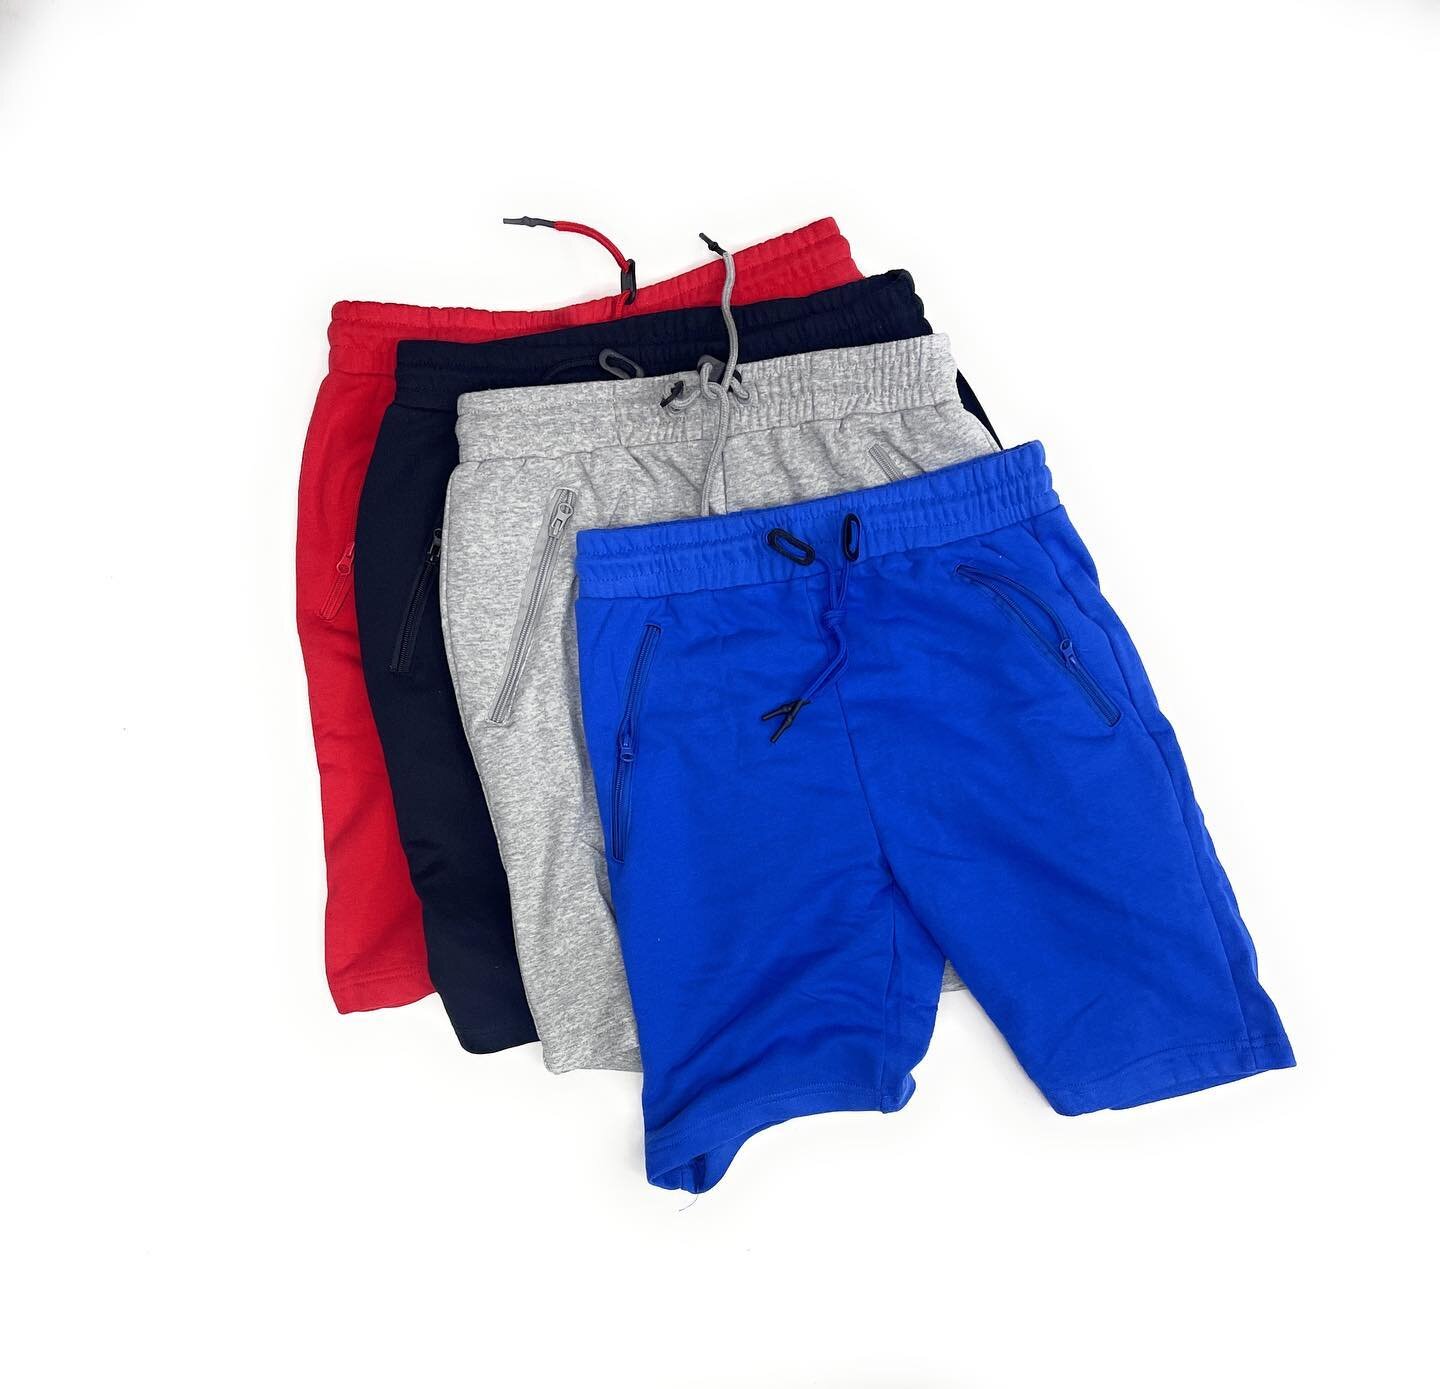 Terry cloth Shorts with zipper pockets 

#wholesale #retail #yandkapparel #newyorkfashion #newyork #mensfashion #streetfashion #instore #onlineshopping #shorts #summer #summerfashion #workout #athleticwear